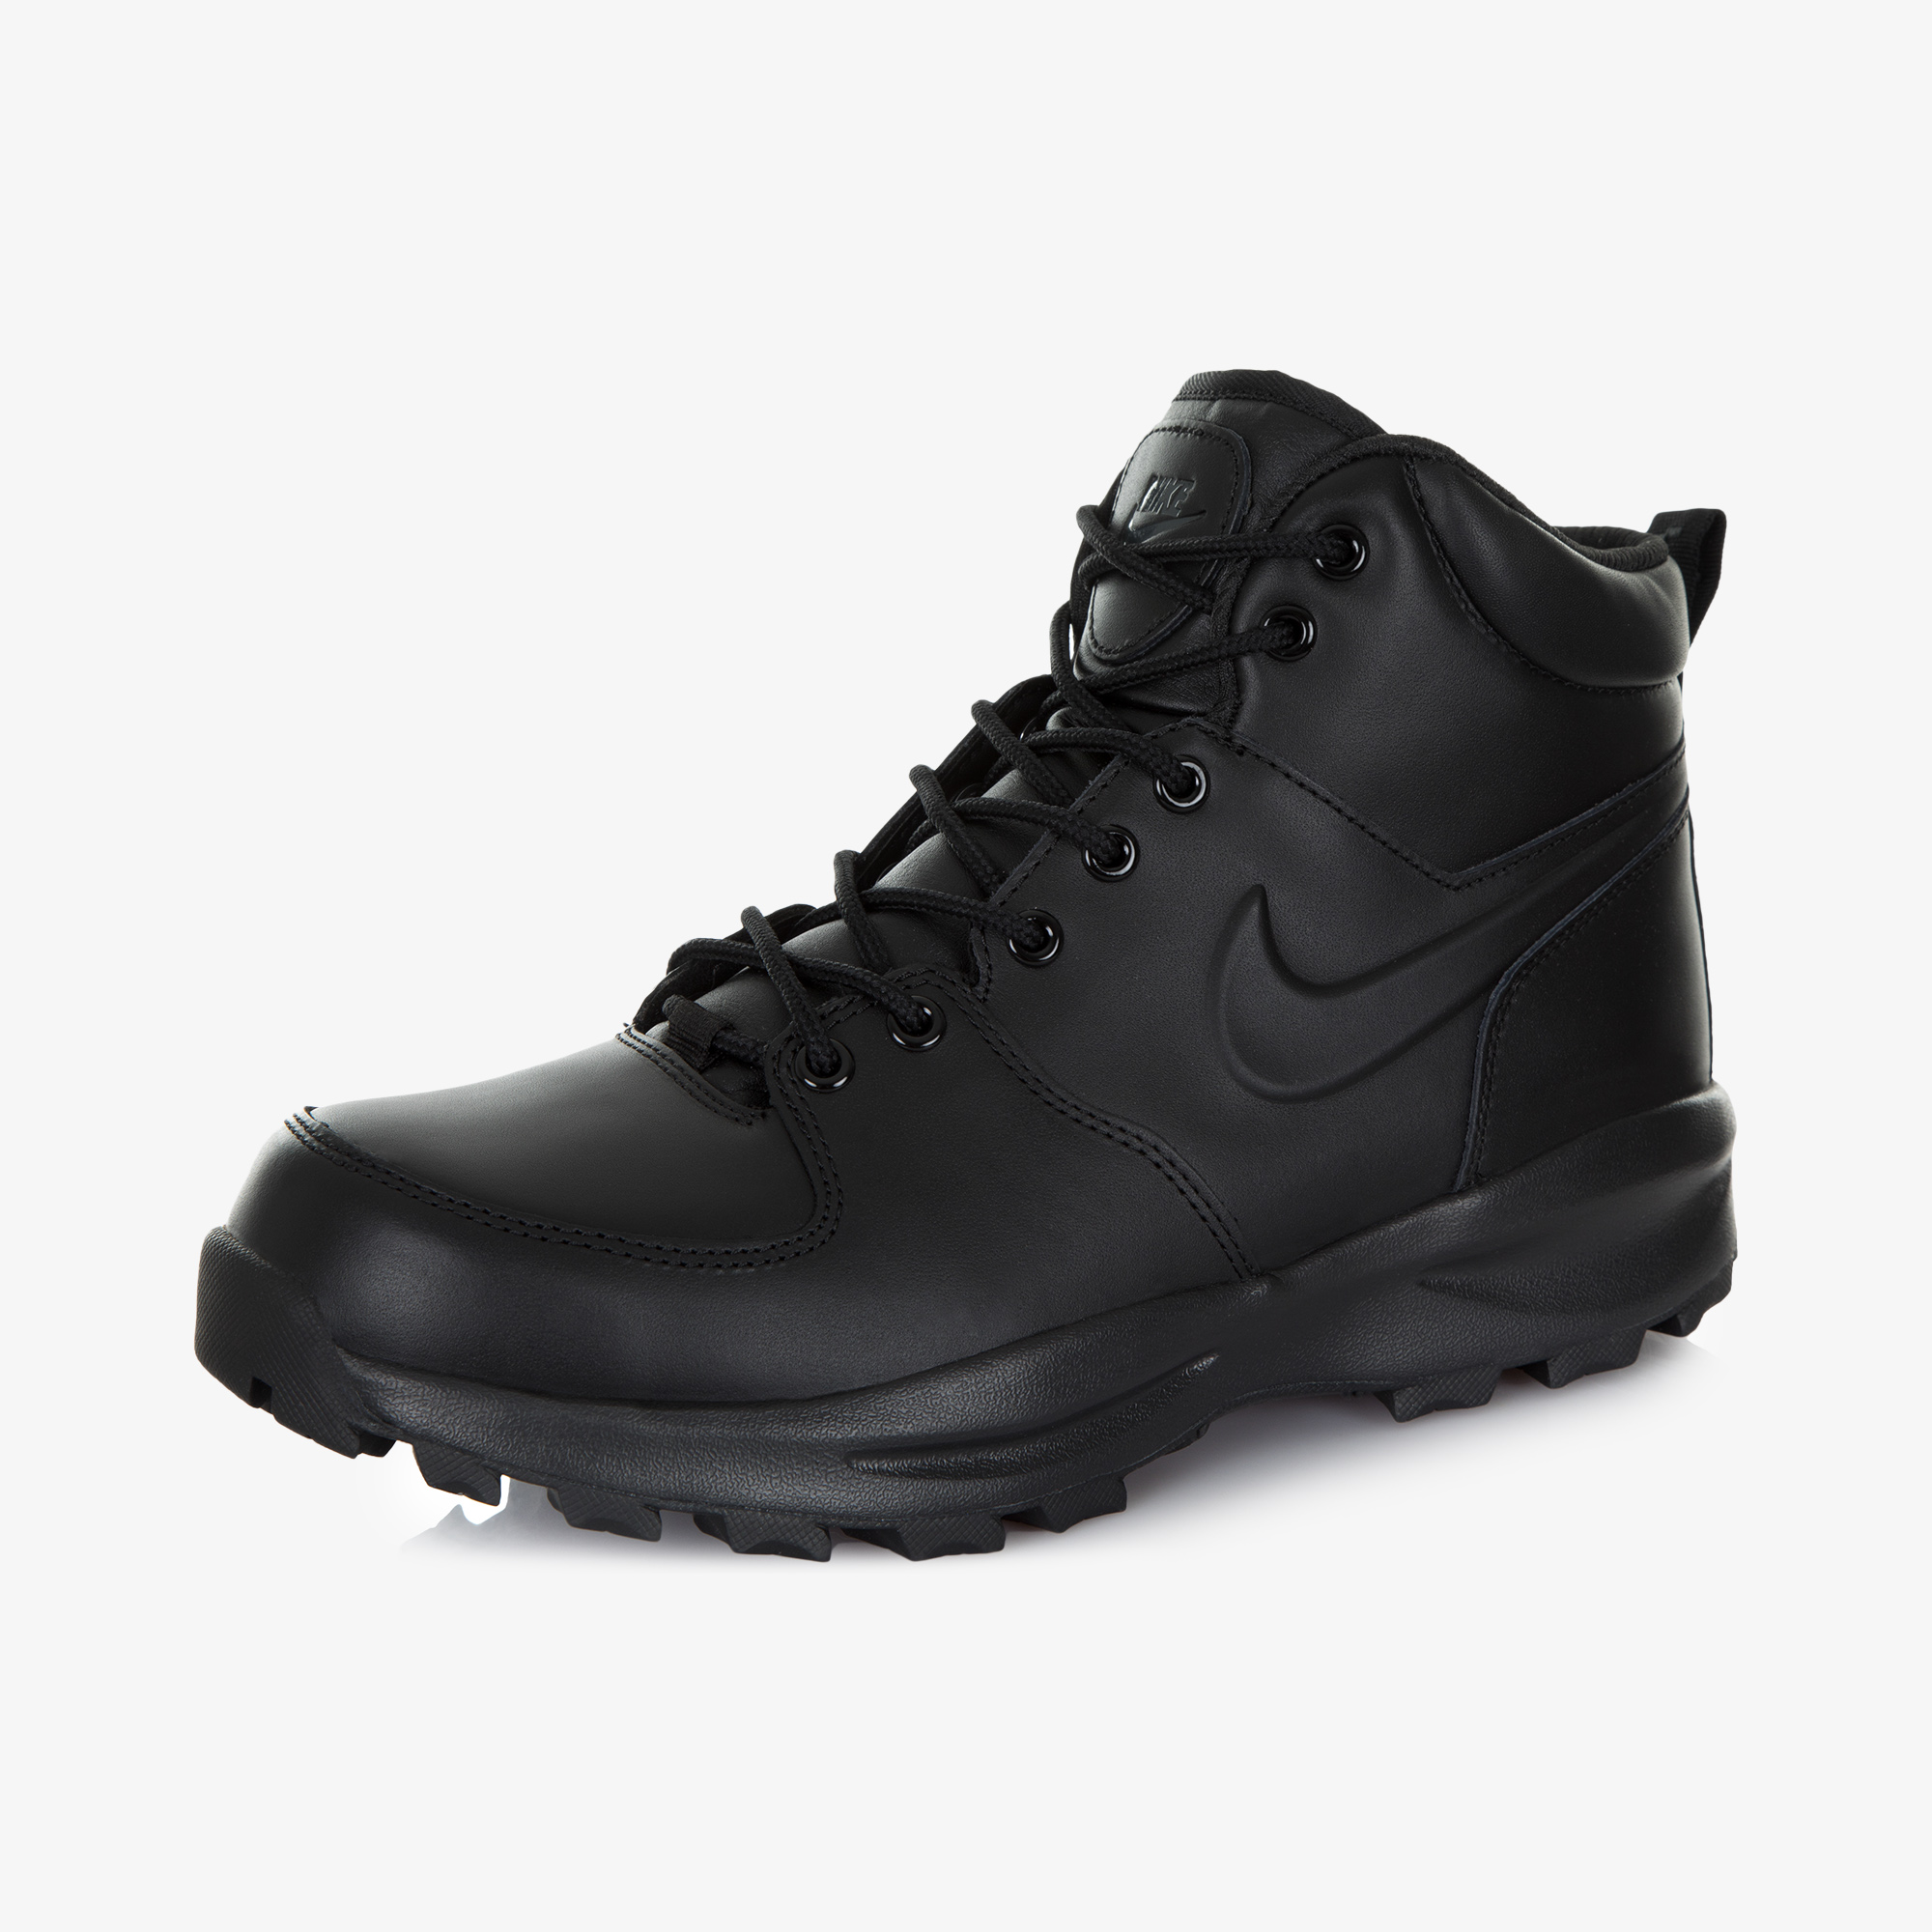 Ботинки Nike Nike Manoa Leather 454350-N06-003, размер Да, цвет черный 454350-003 - фото 2